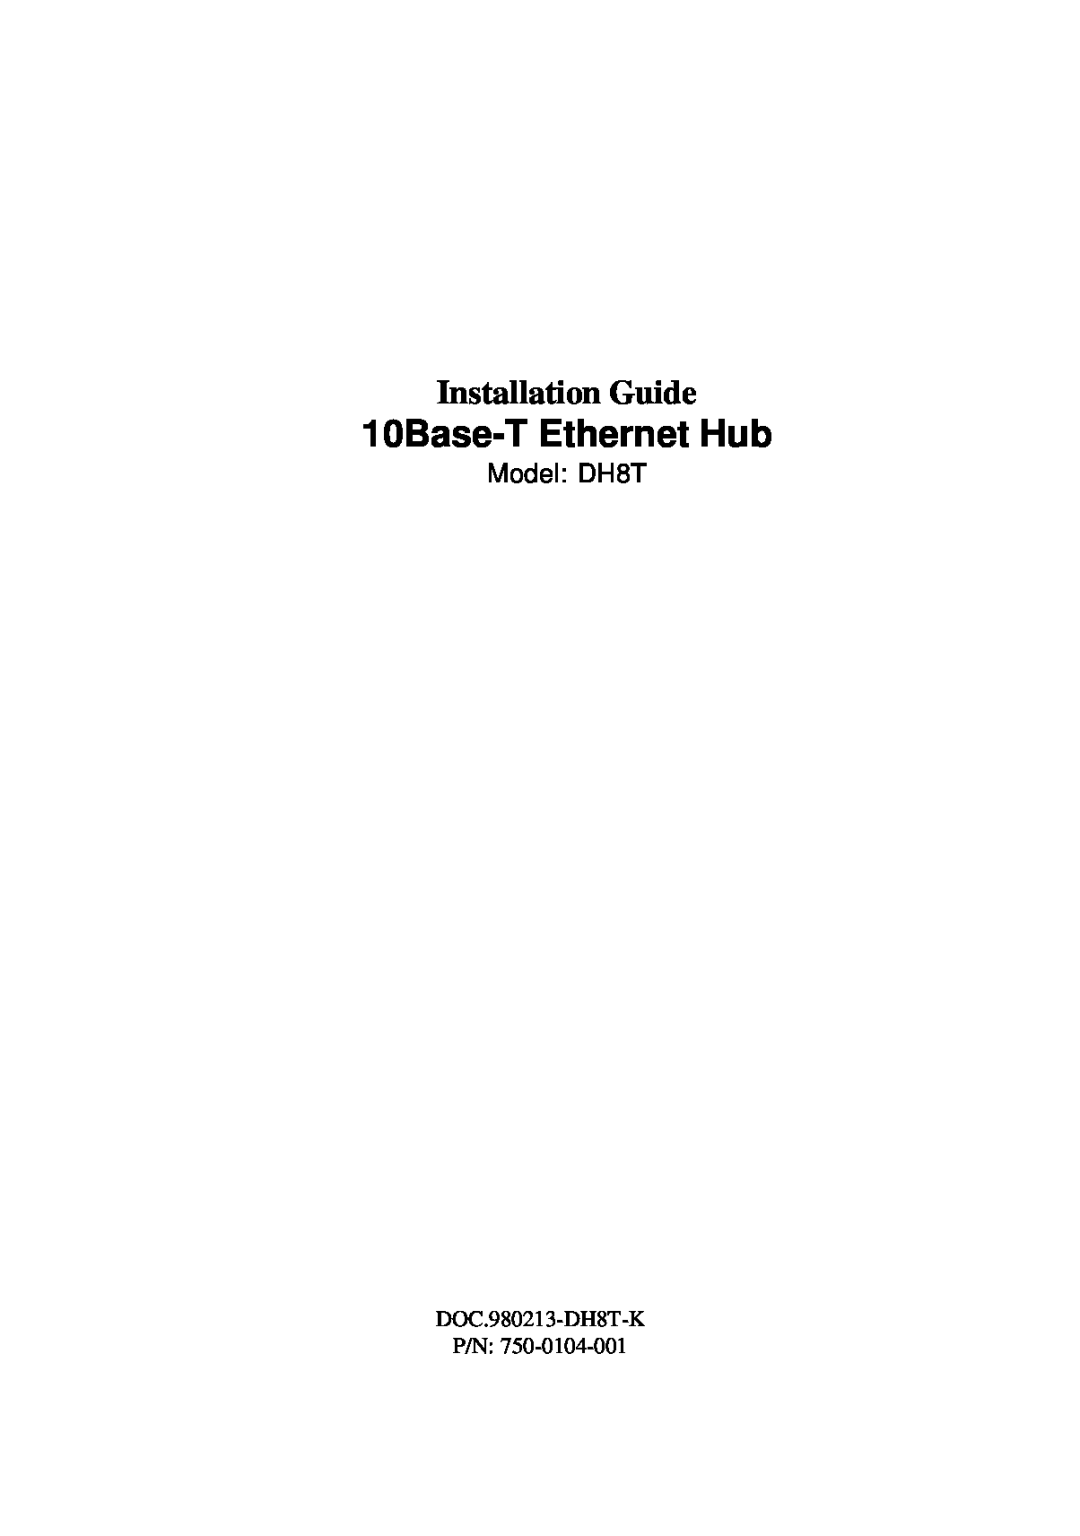 KTI Networks DH-8T manual 10Base-T Ethernet Hub, Installation Guide, Model DH8T, DOC.980213-DH8T-K P/N 